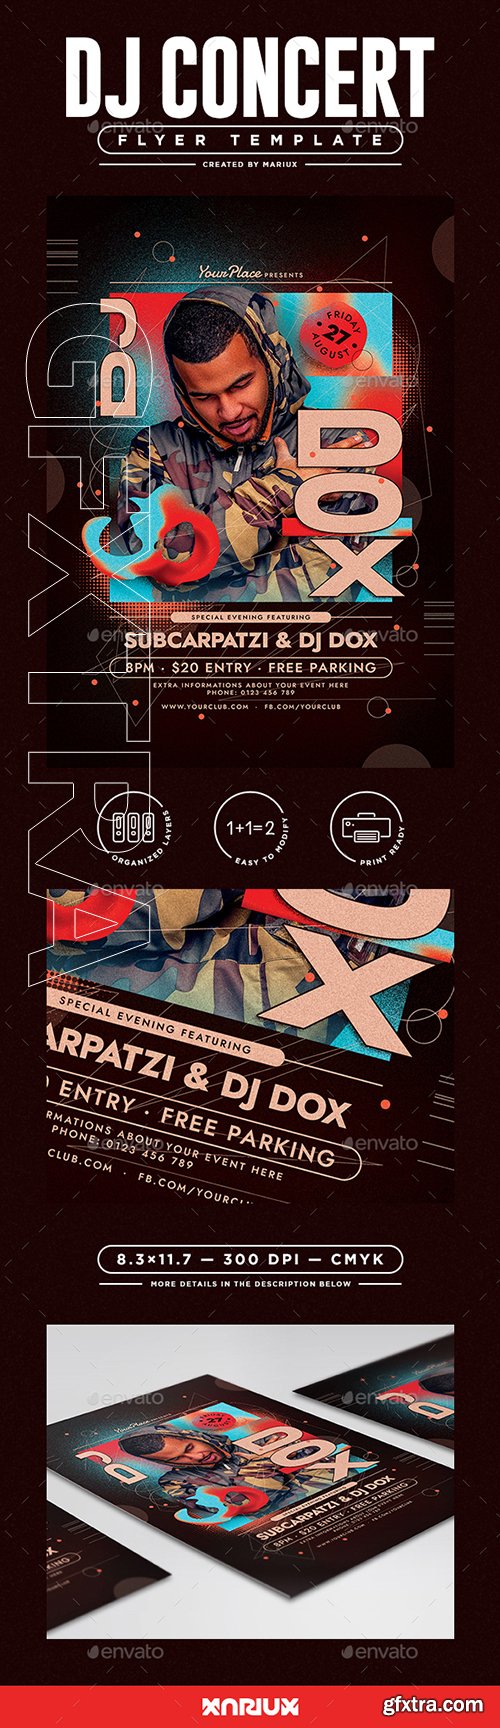 GraphicRiver - DJ Concert Flyer Template 22359175